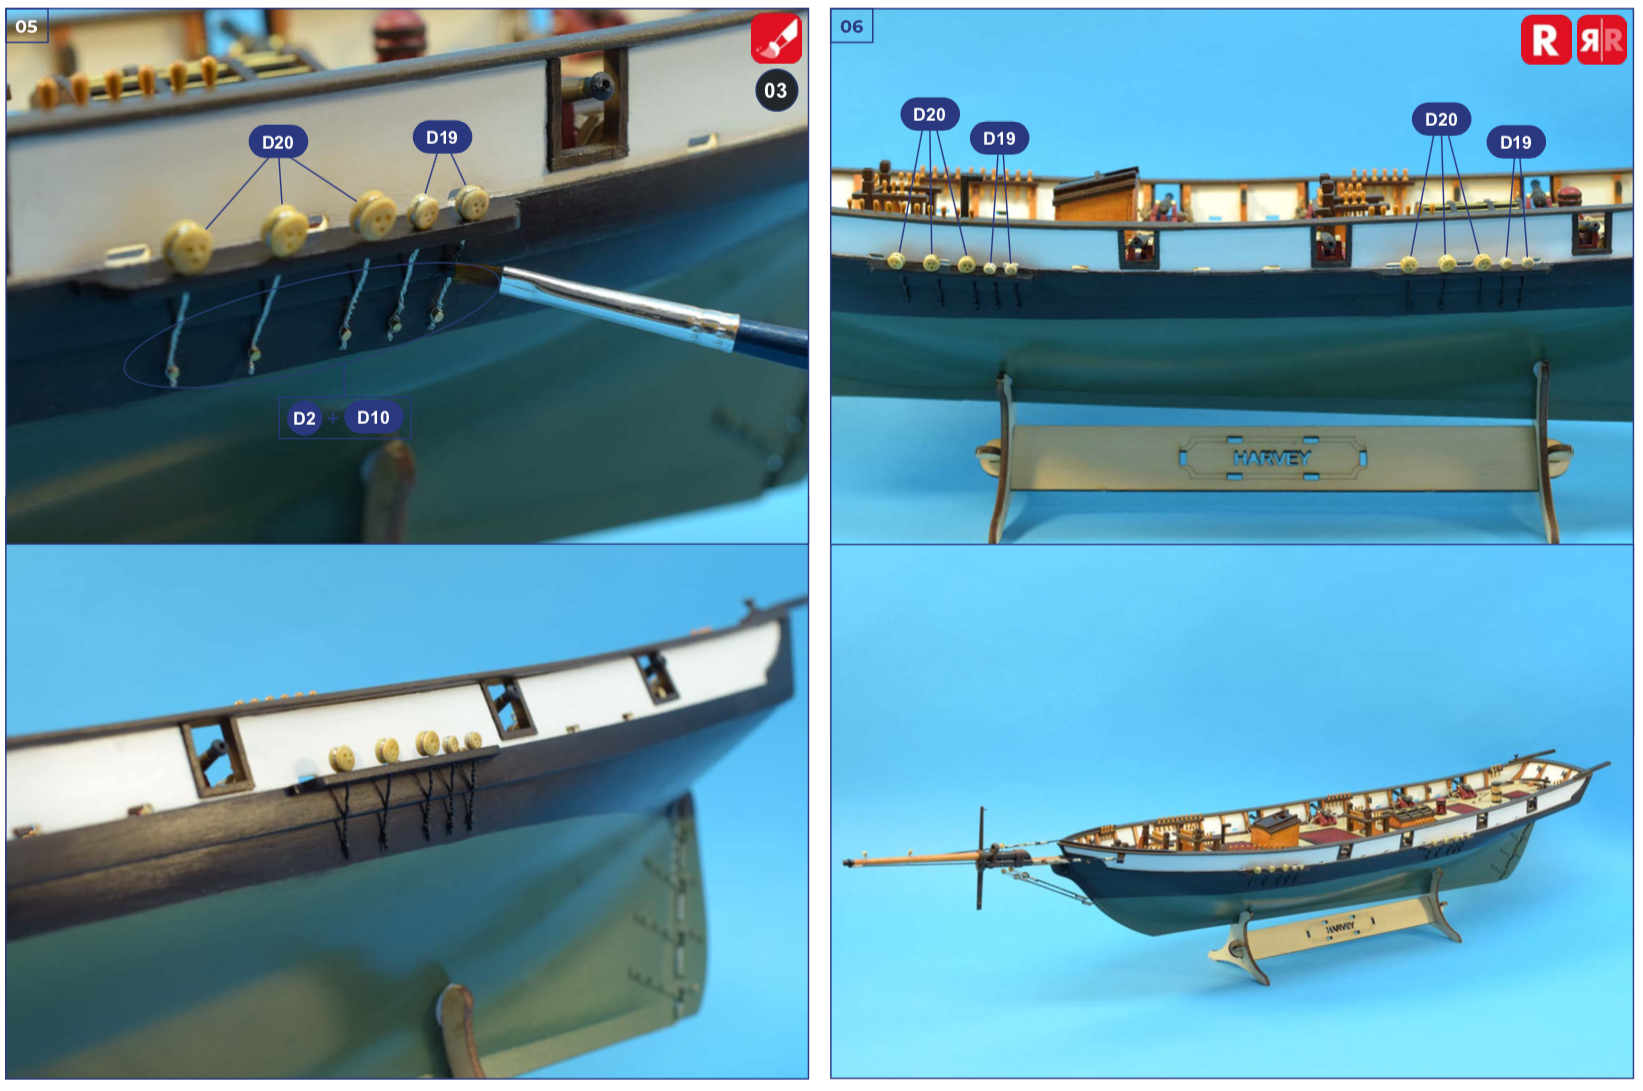 Acrylic Paints Set. Schooners Model Ships Virginia & Harvey